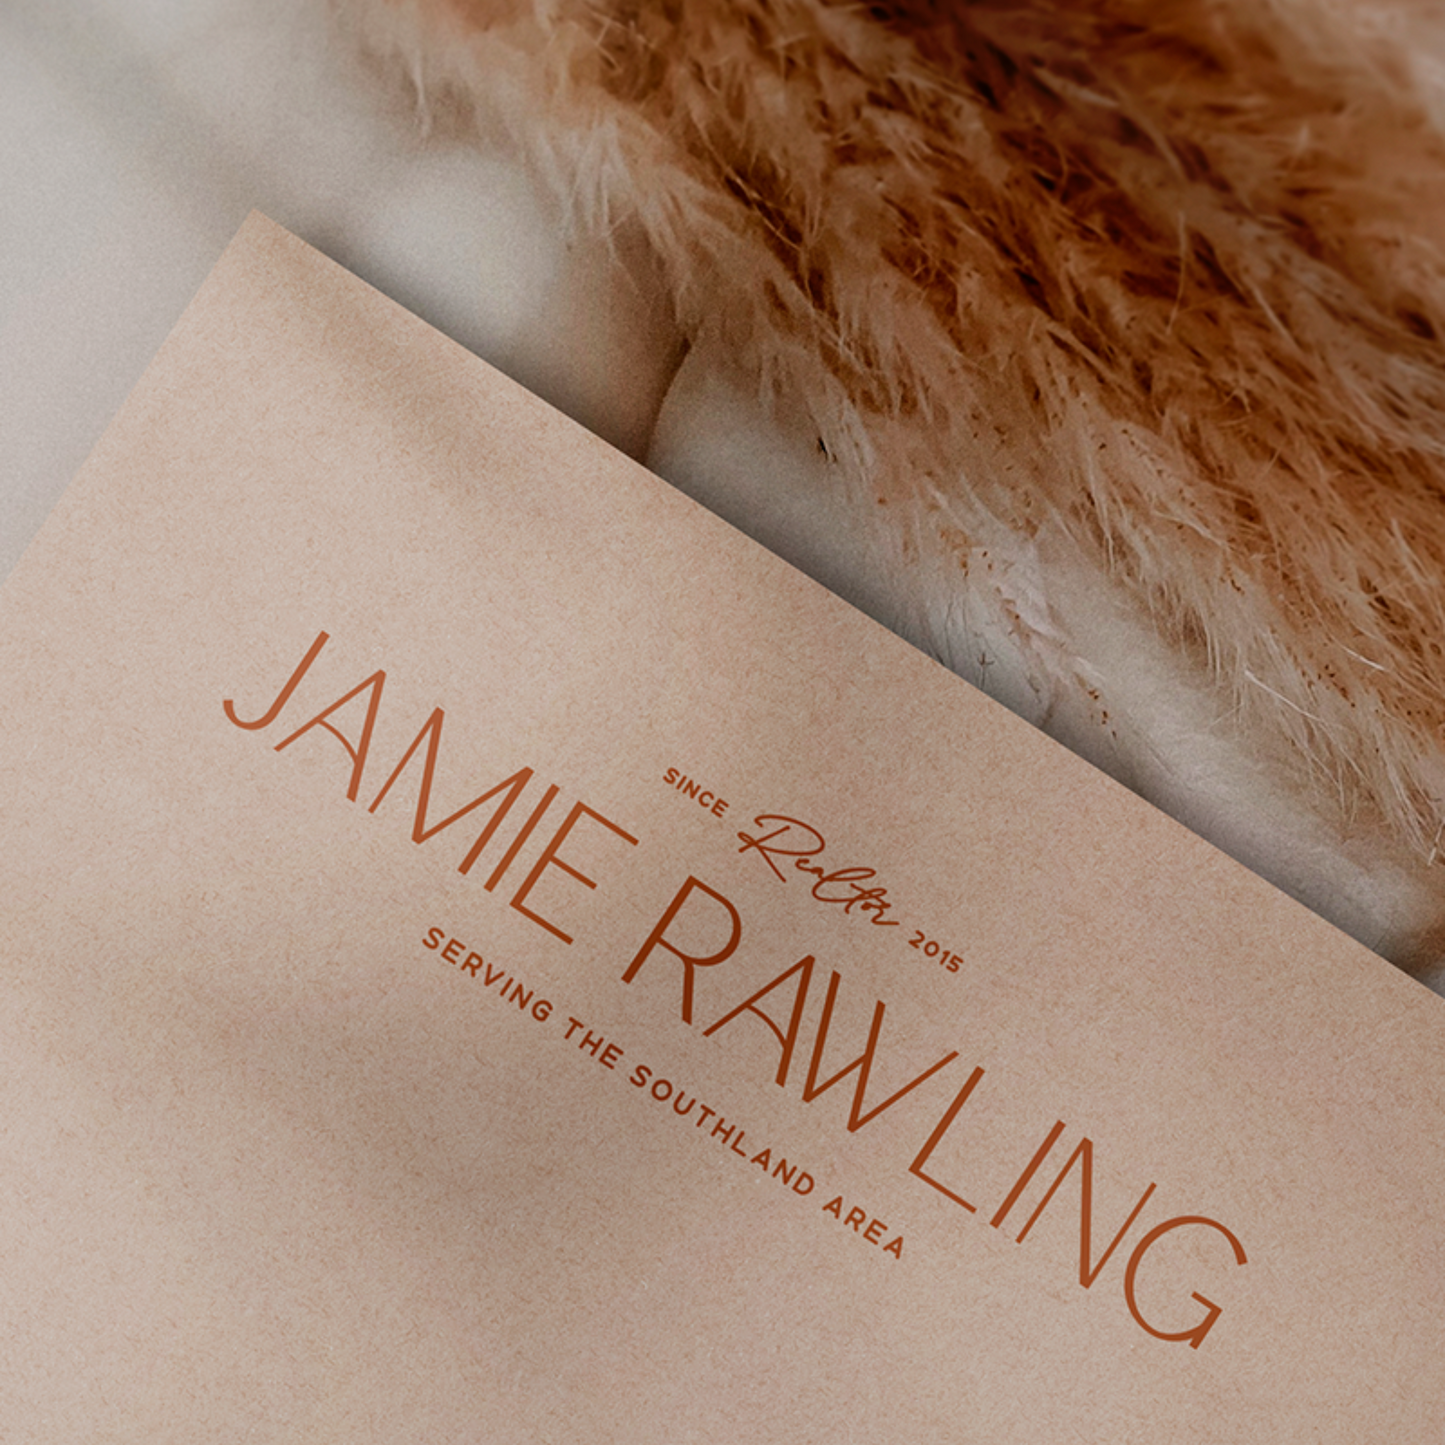 The Jamie : A Real Estate Pre-Made Brand